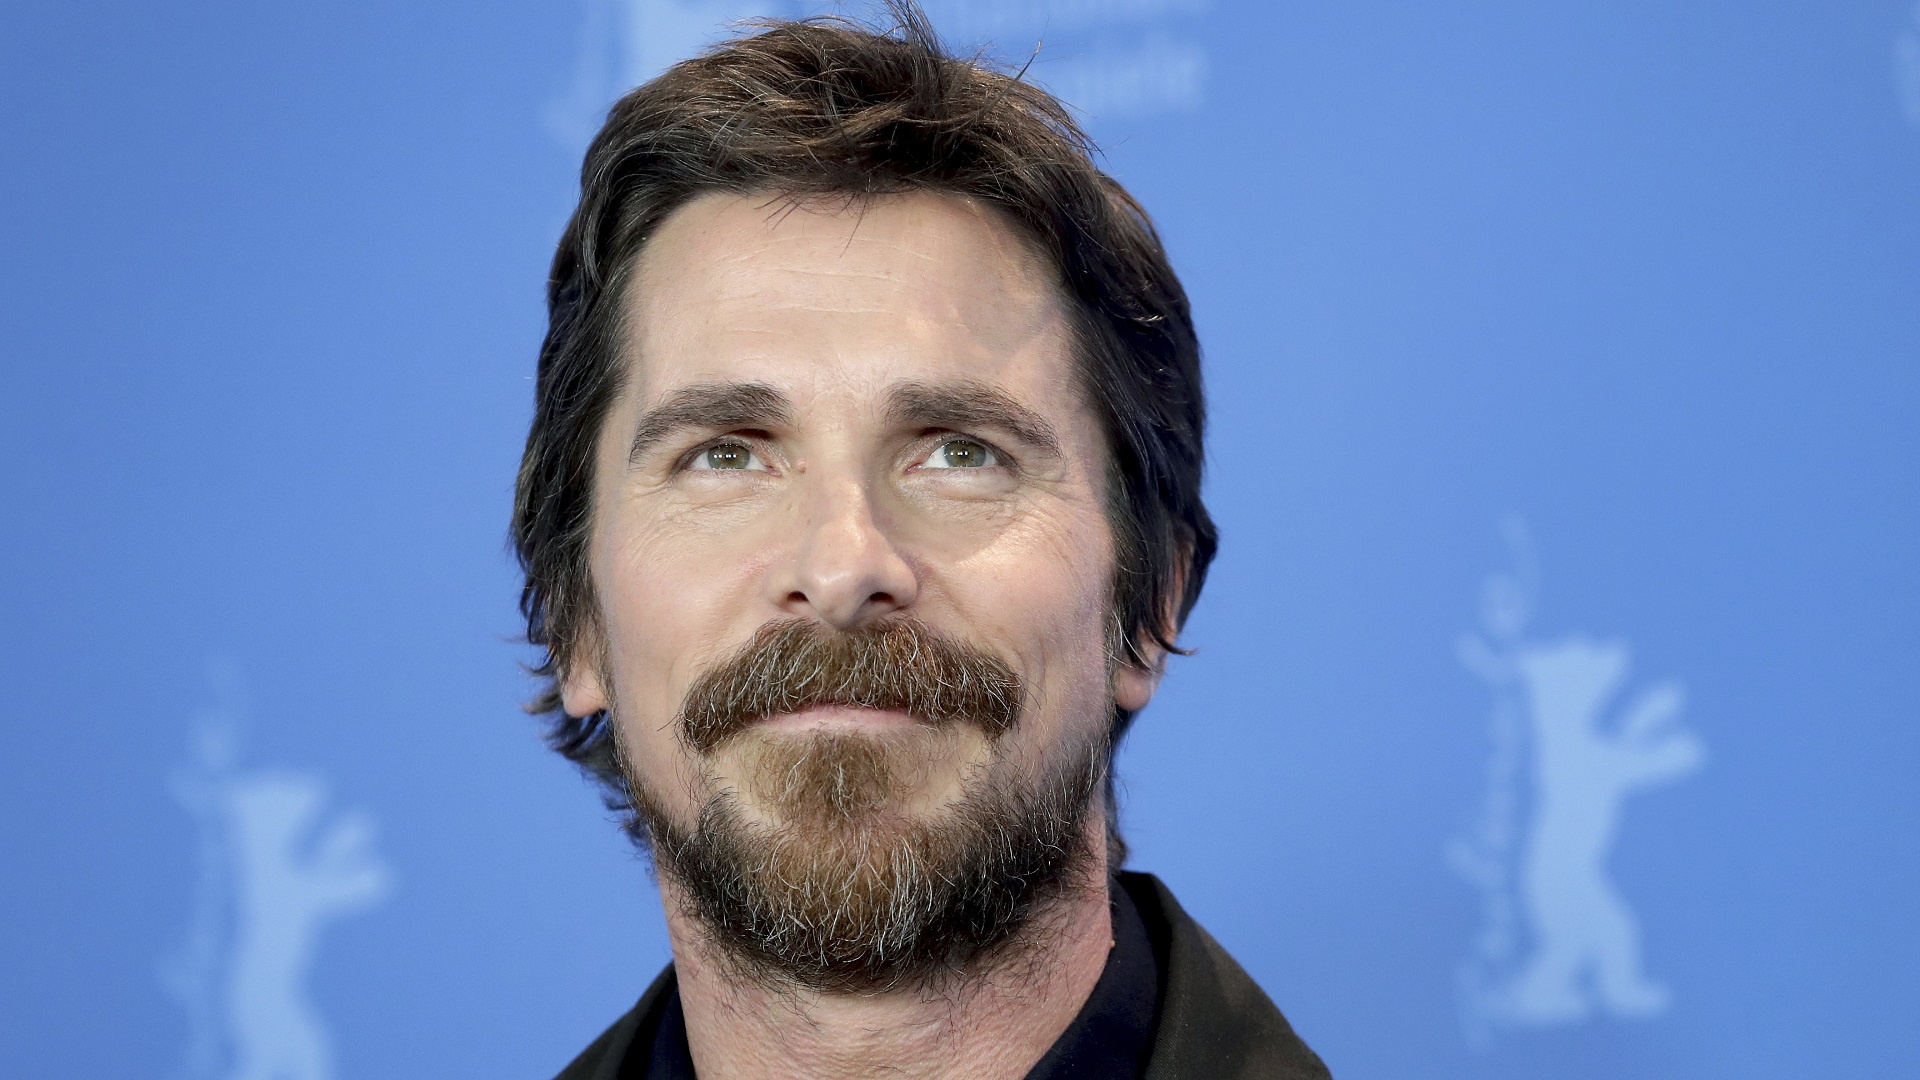 Wallpaper Of Actor, Beard, Christian Bale, English, - Christian Bale Hd - HD Wallpaper 